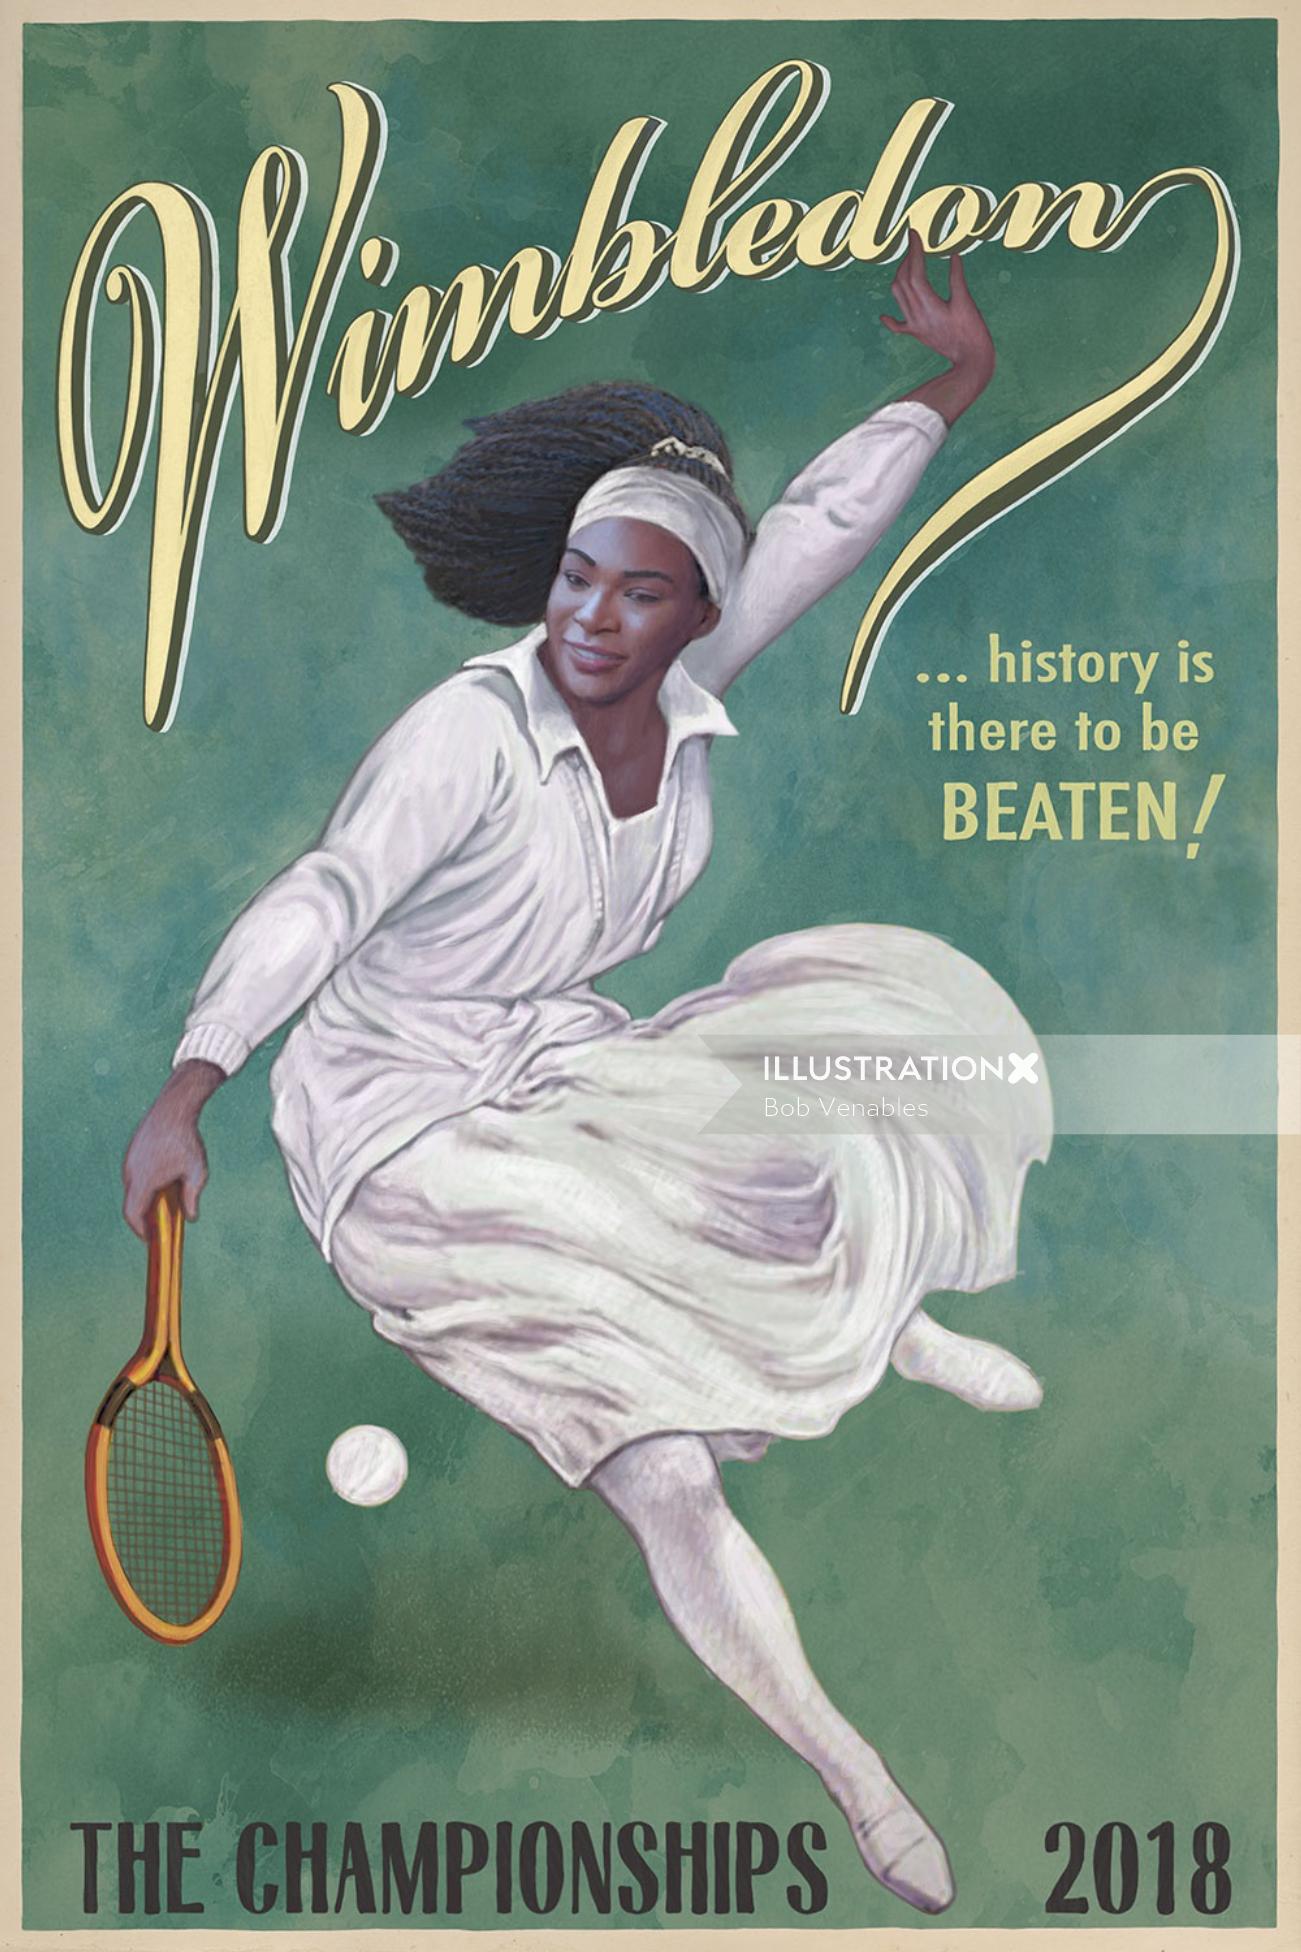 Cartaz de publicidade do Campeonato de Tênis de Wimbledon